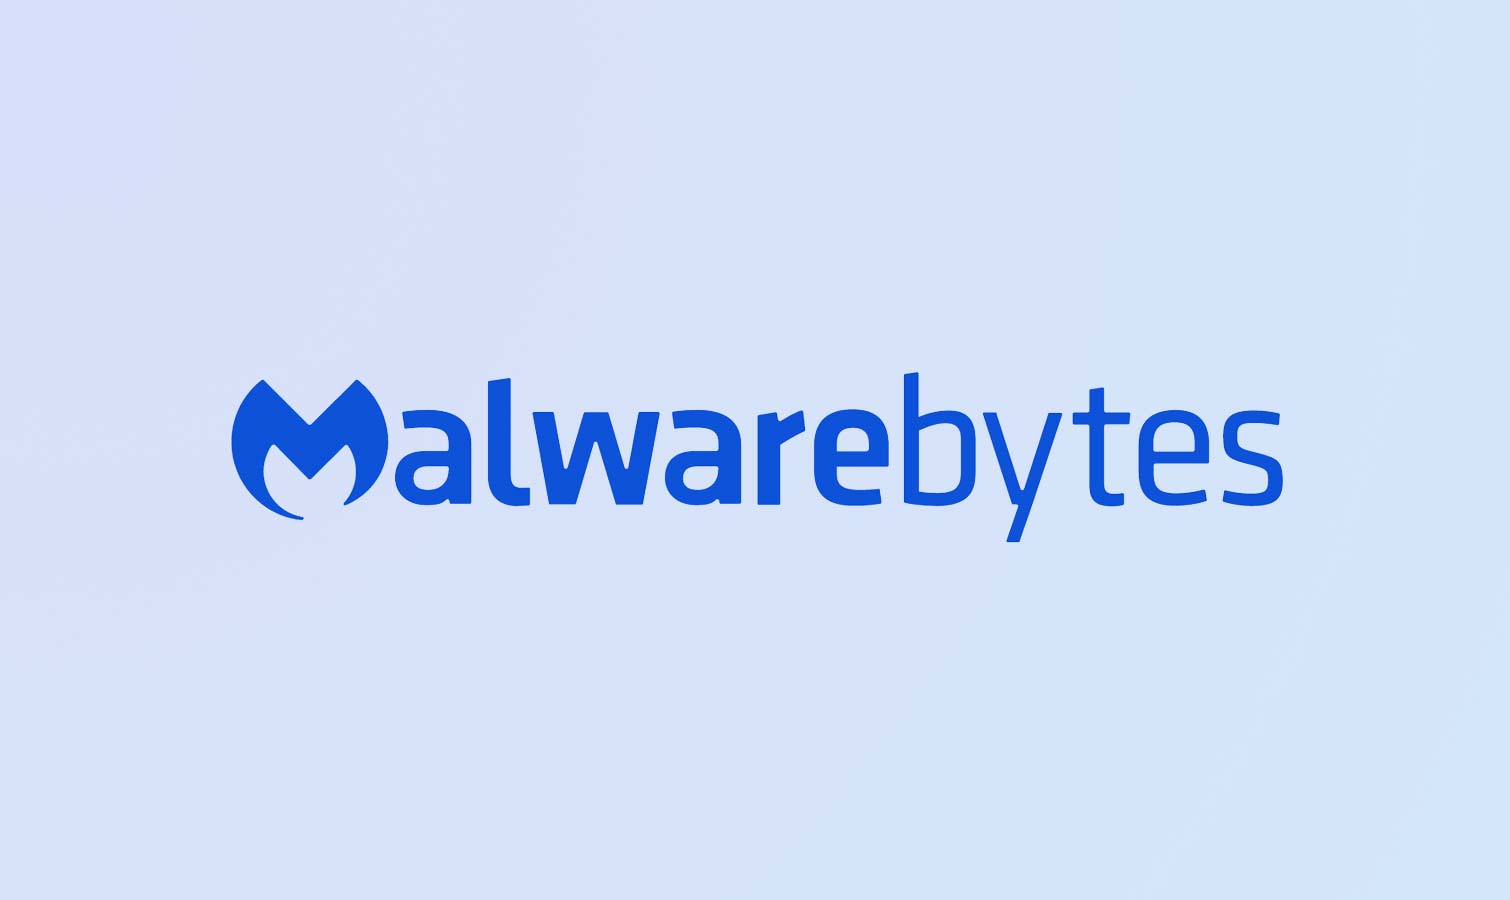 malwarebytes full free download latest version